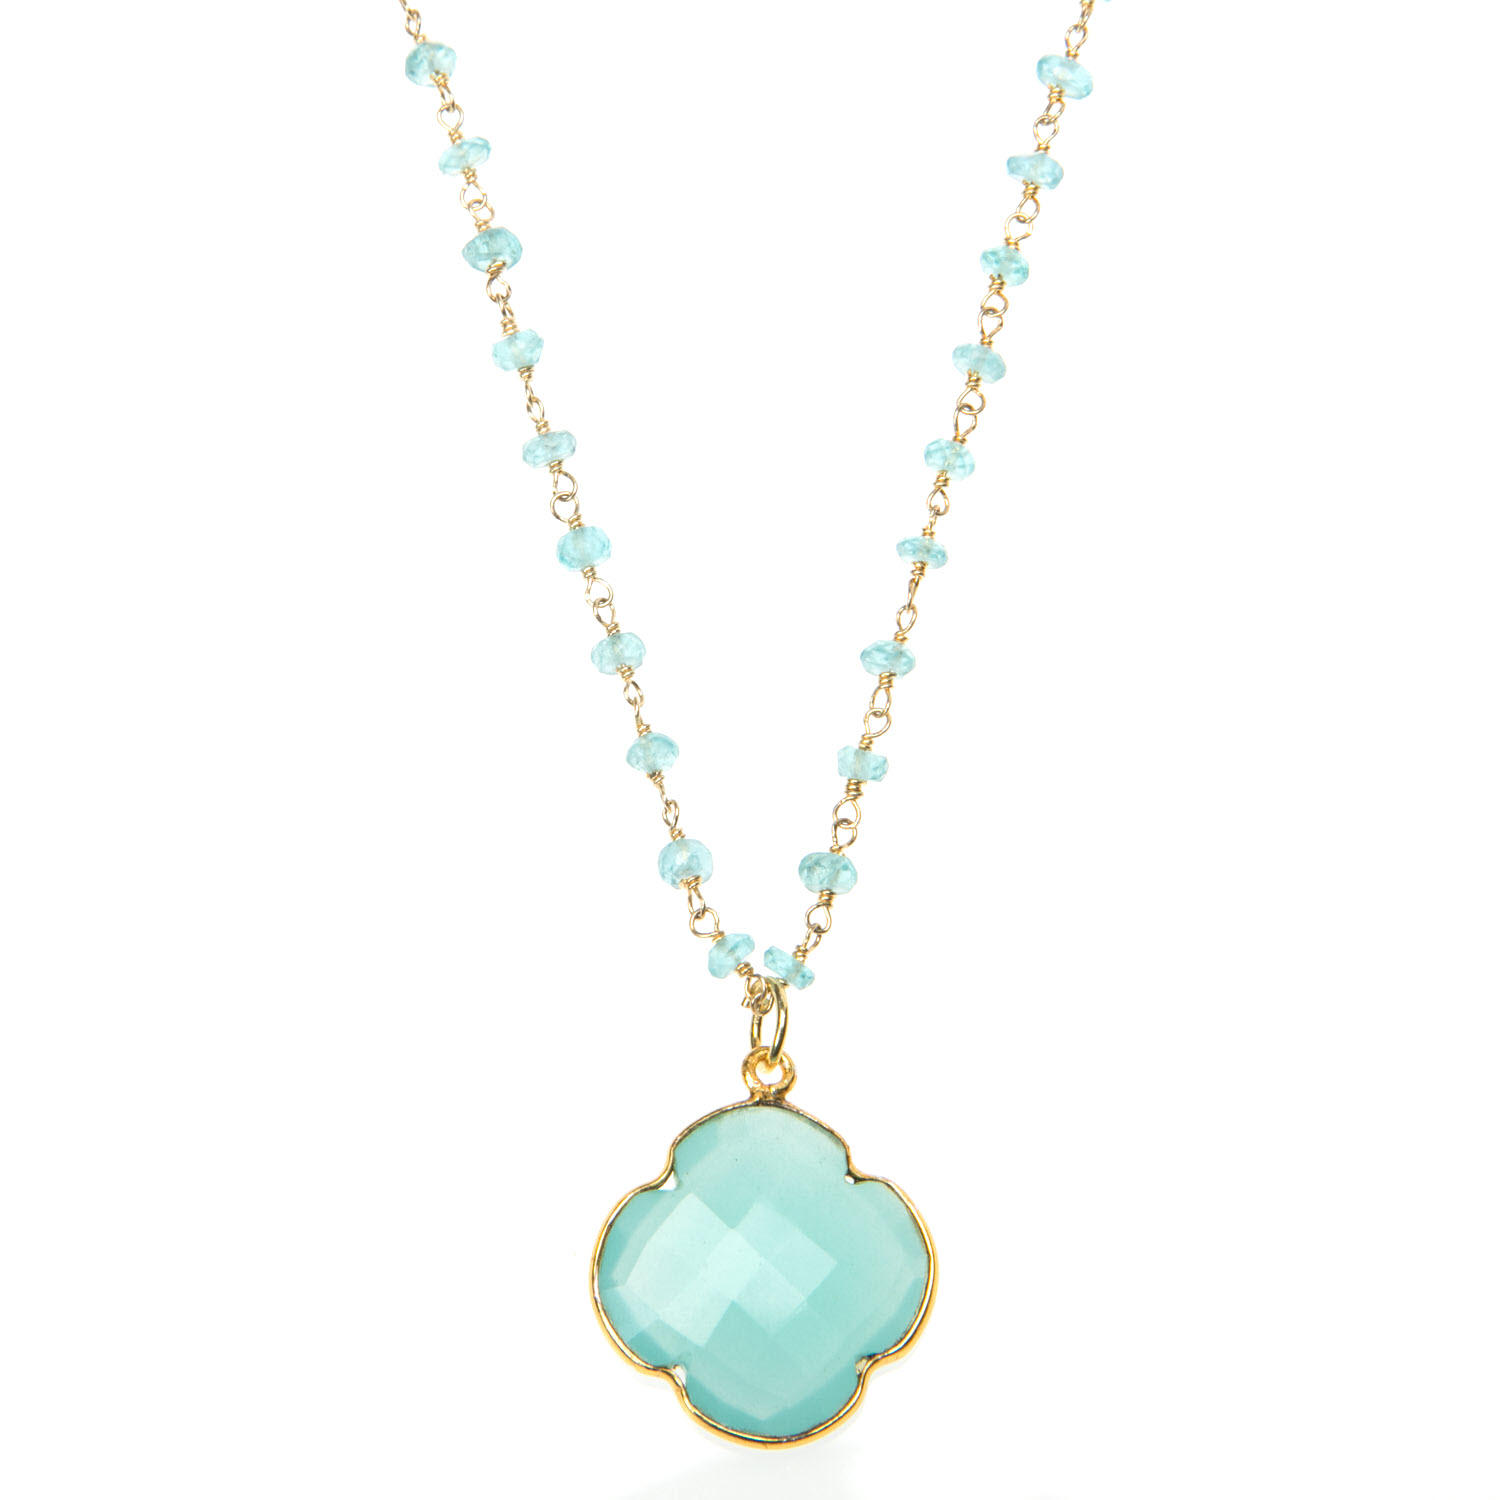 Aqua Blue Chalcedony and Apatite gemstone Pendant